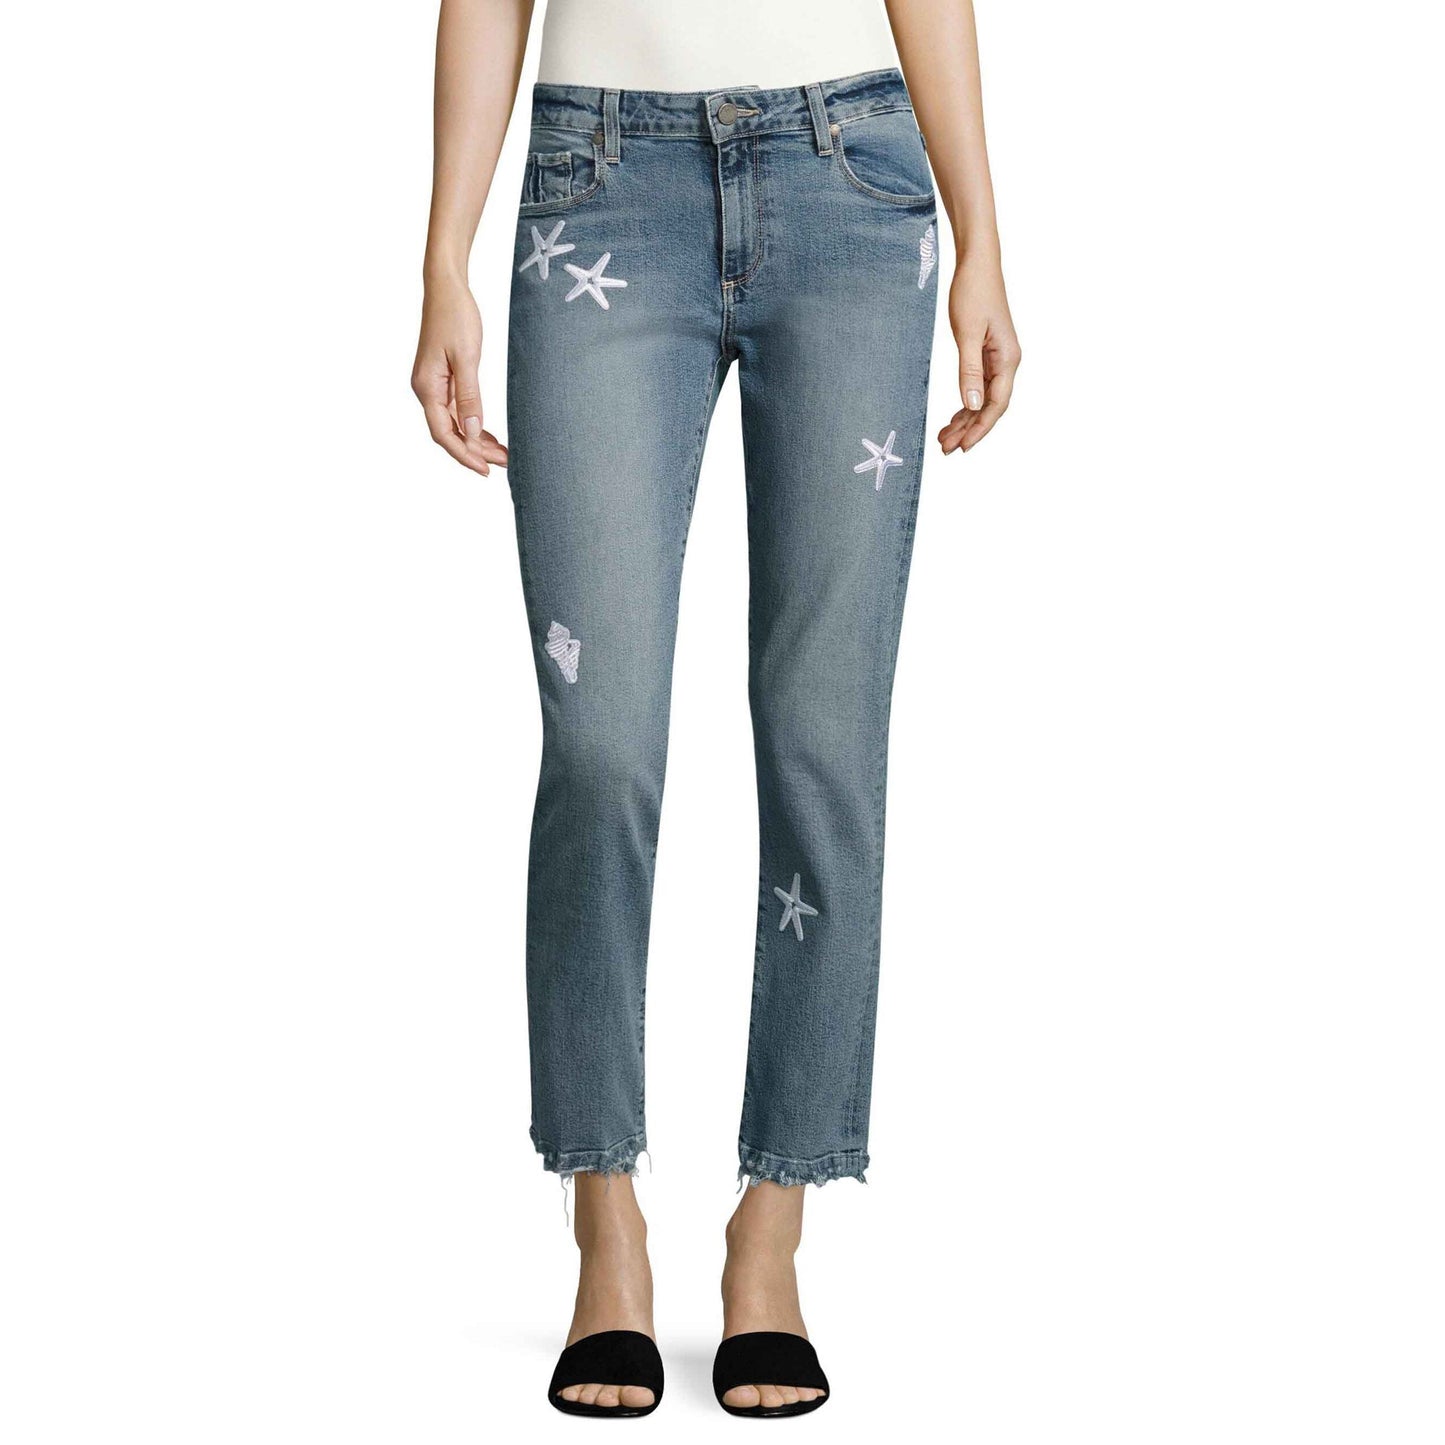 paige brigitte oceania straight crop jeans - size 23